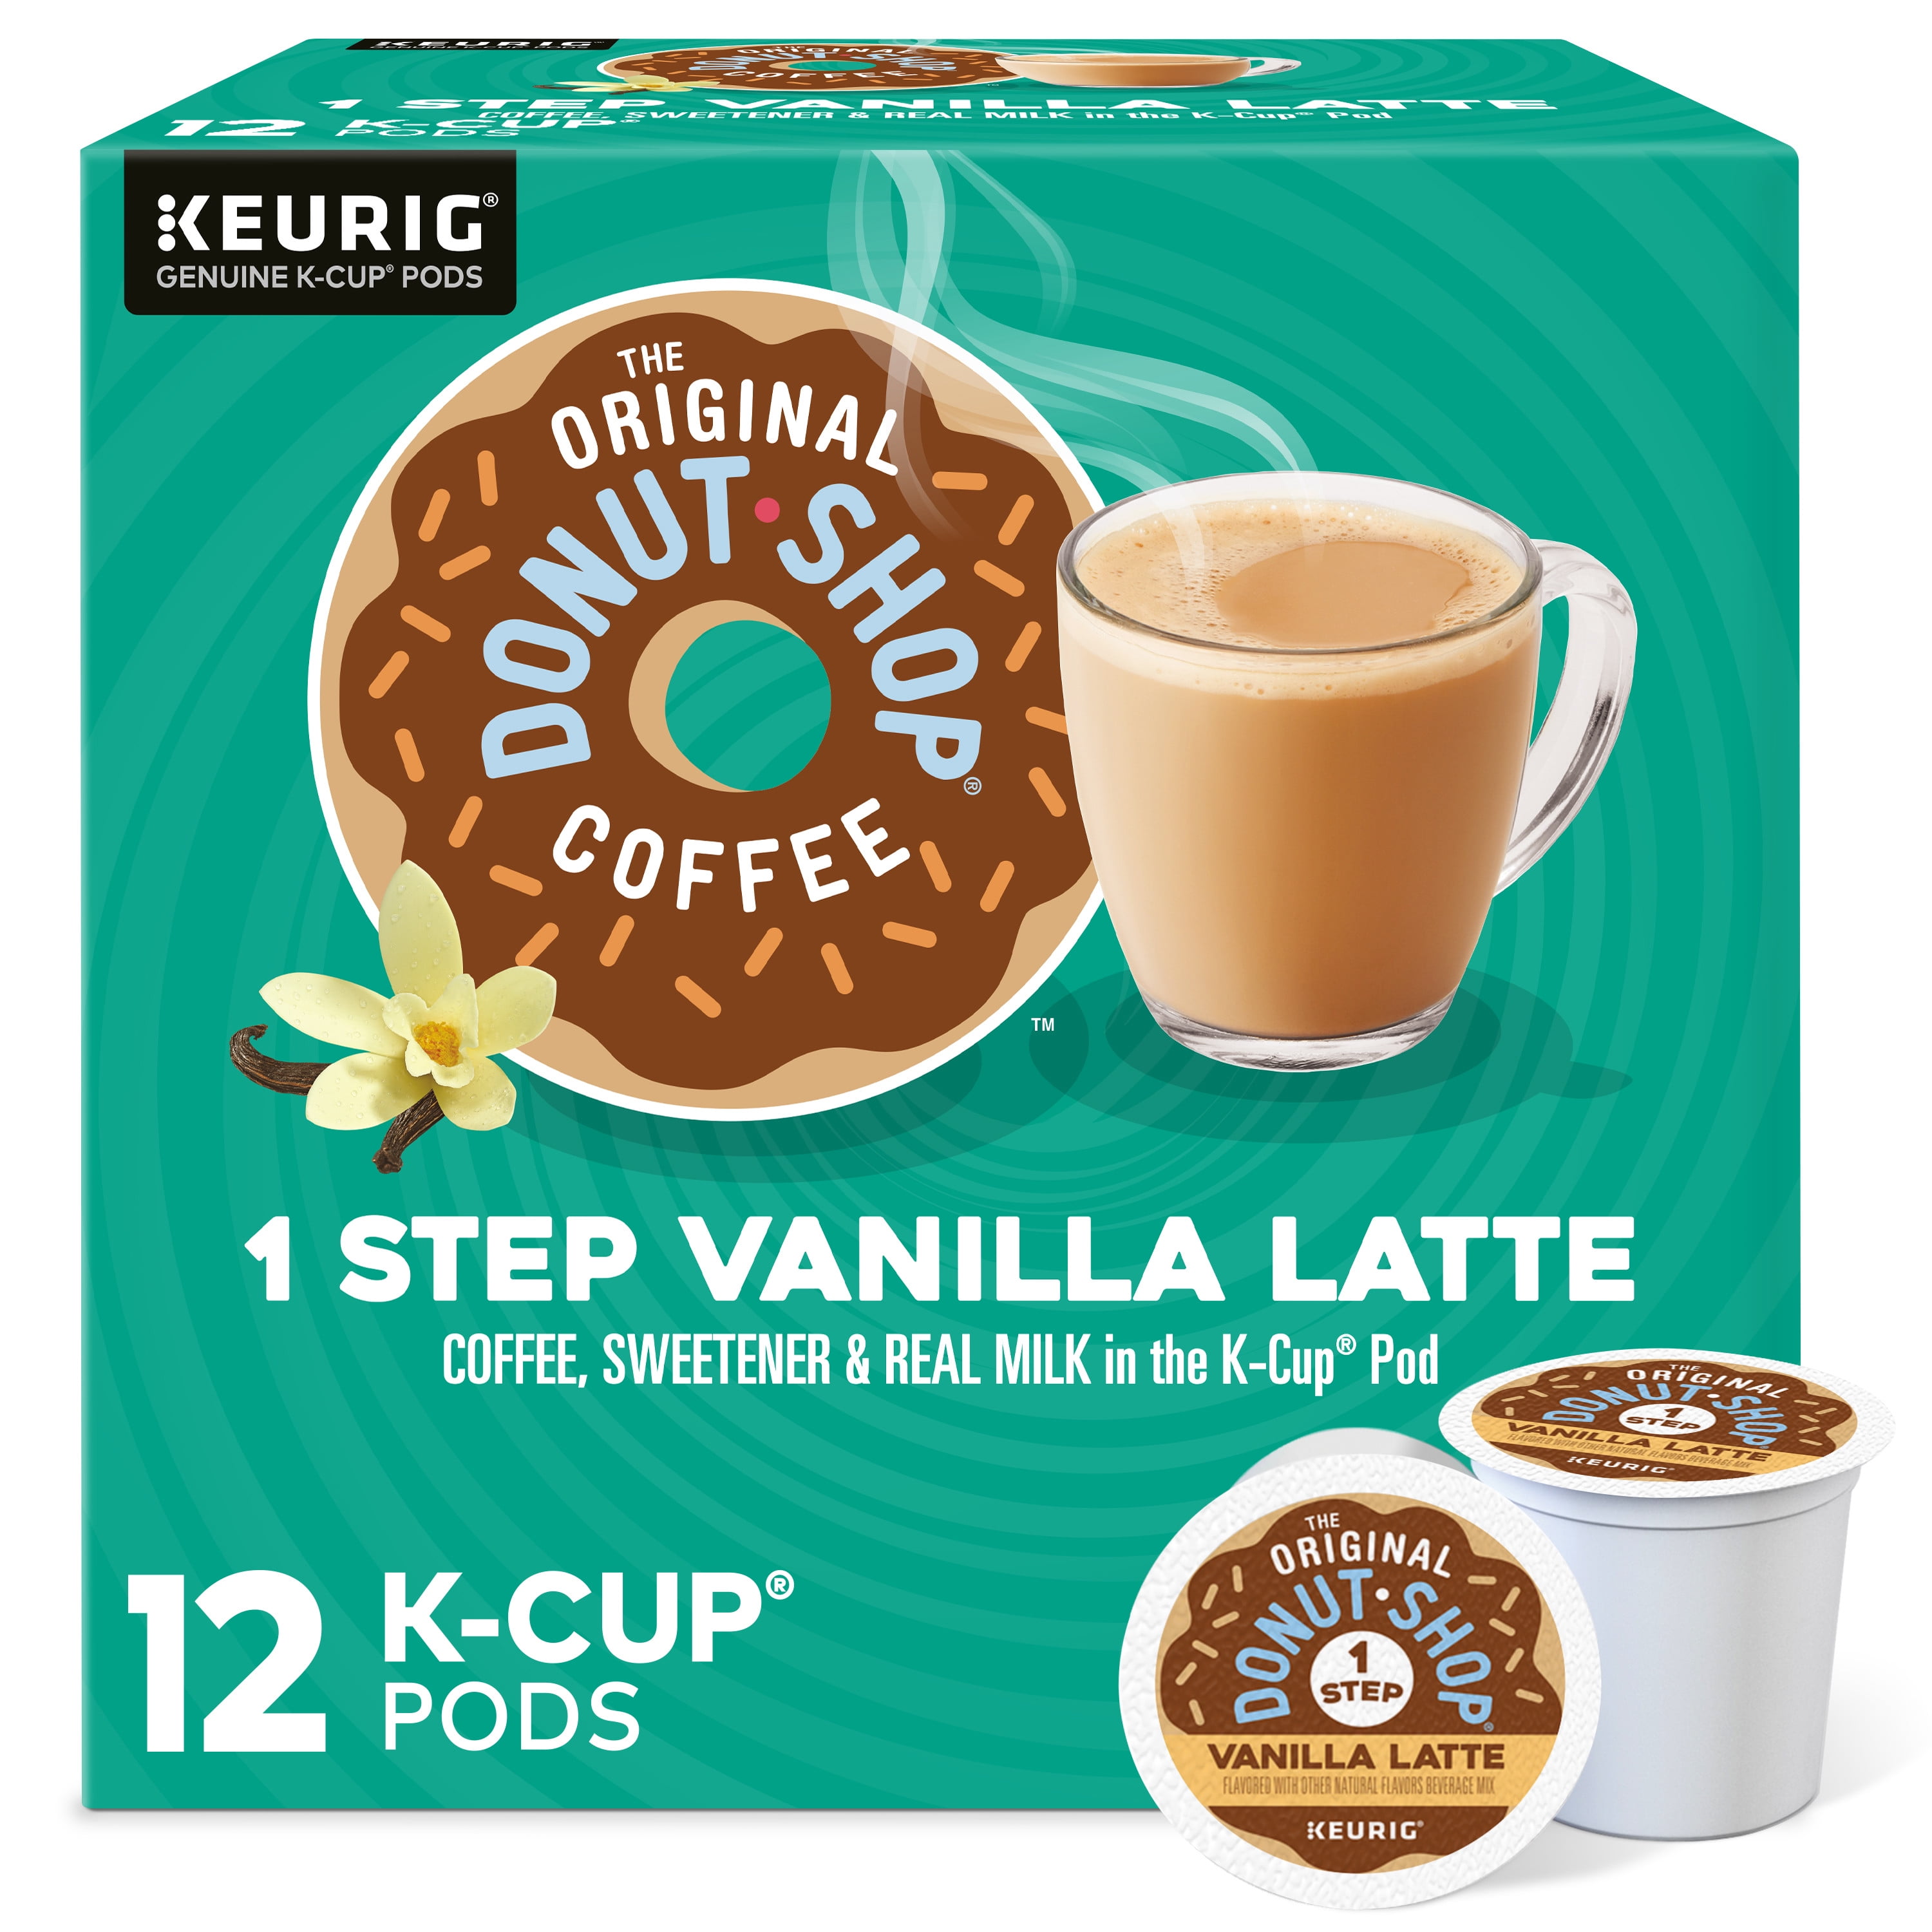 Original Donut Shop, Vanilla Latte Medium Roast K-Cup Coffee Pods, 12 Count